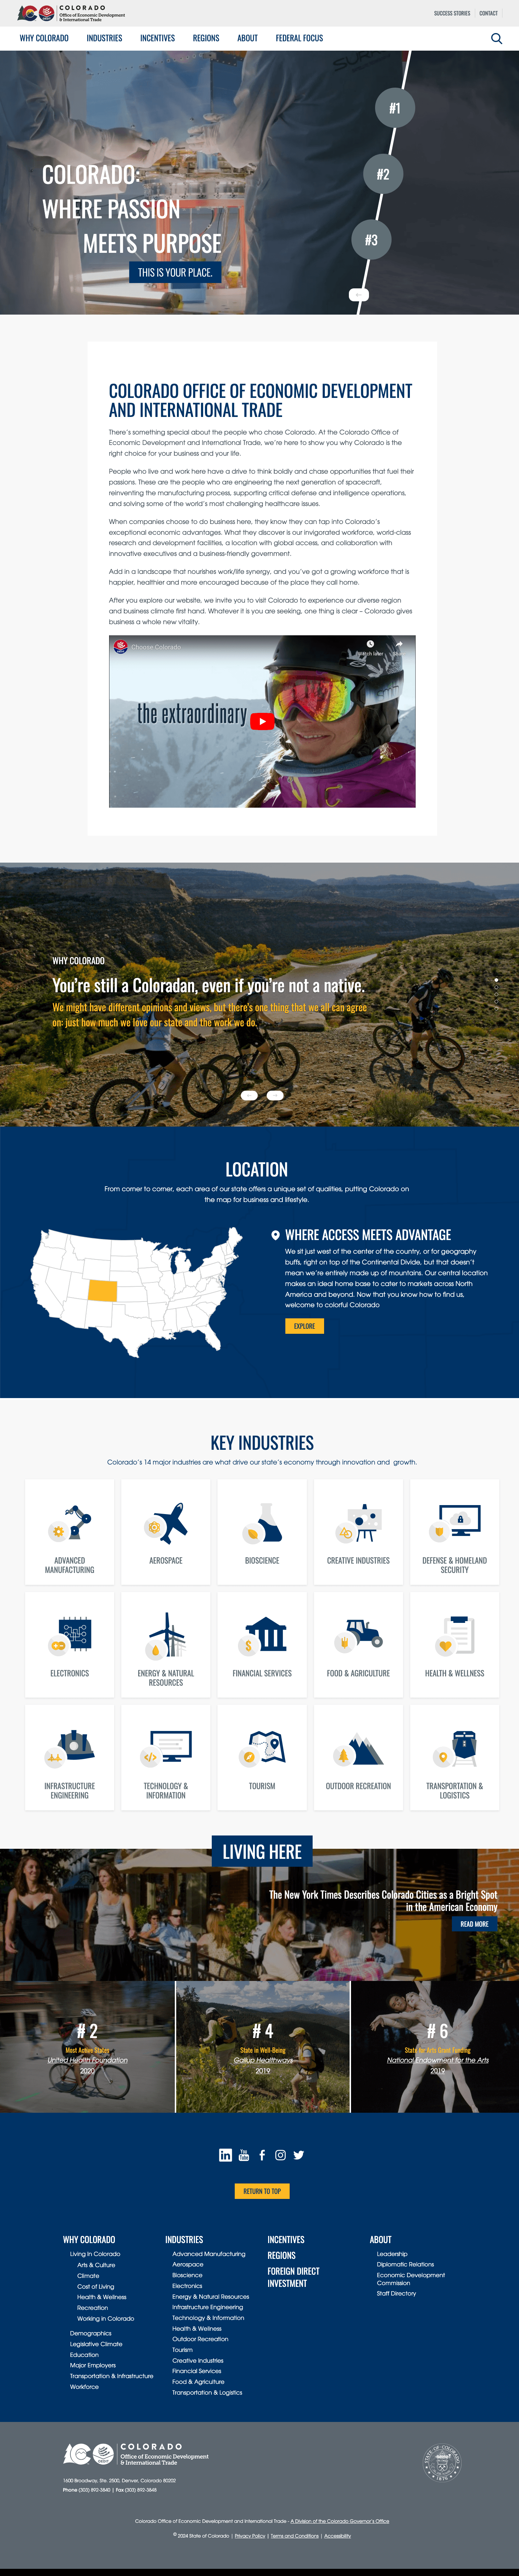 A screenshot of the State of Colorado website